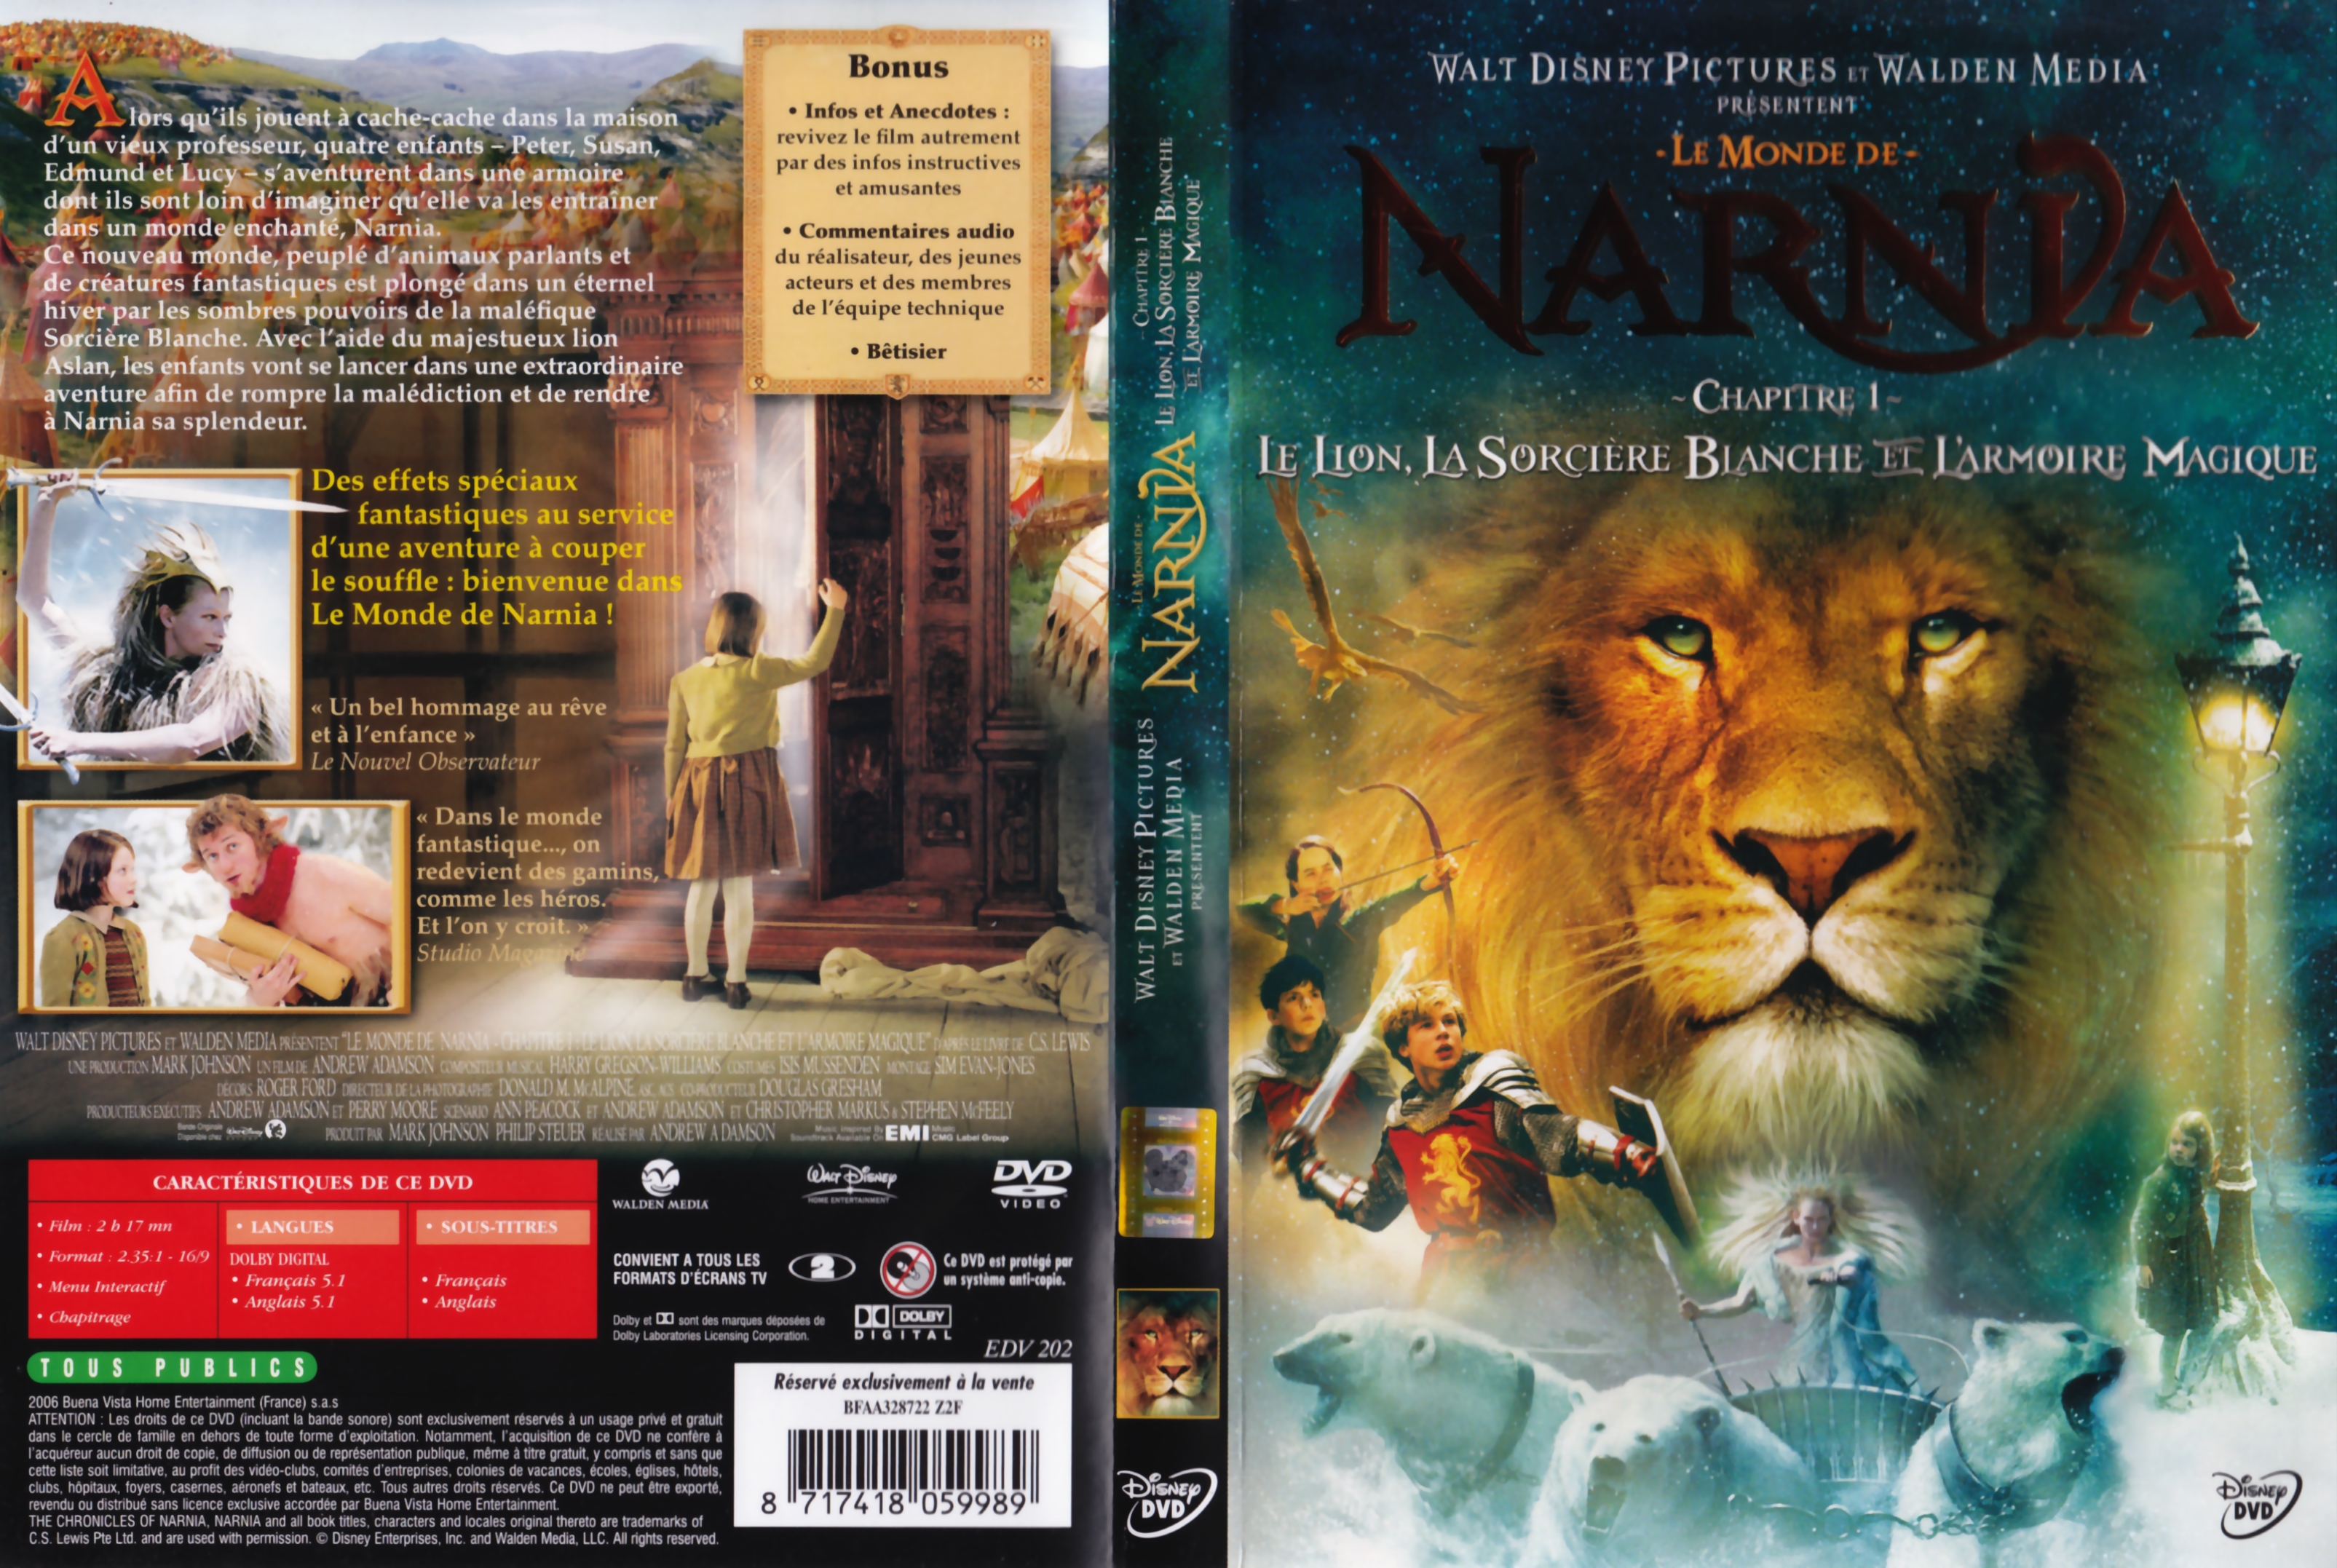 Jaquette DVD Le monde de narnia chapitre 1 v2